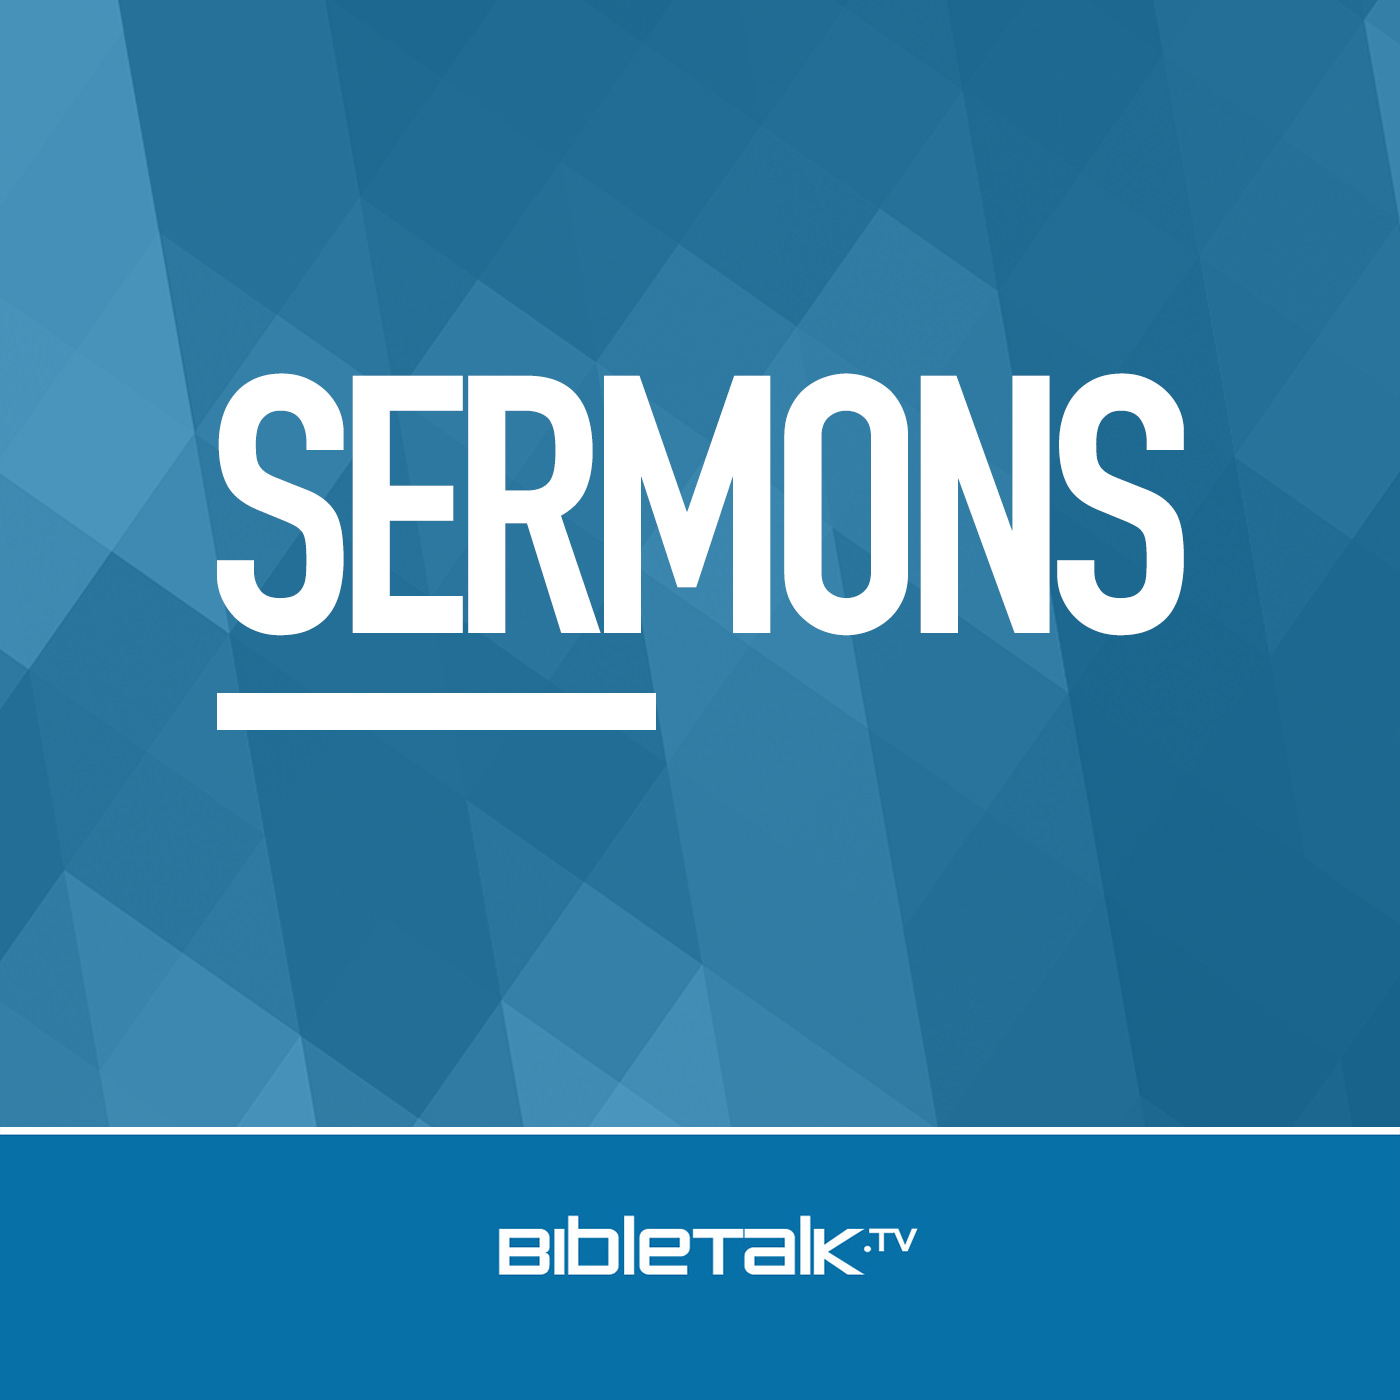 Christian Podcasts - Sermons by Mike Mazzalongo